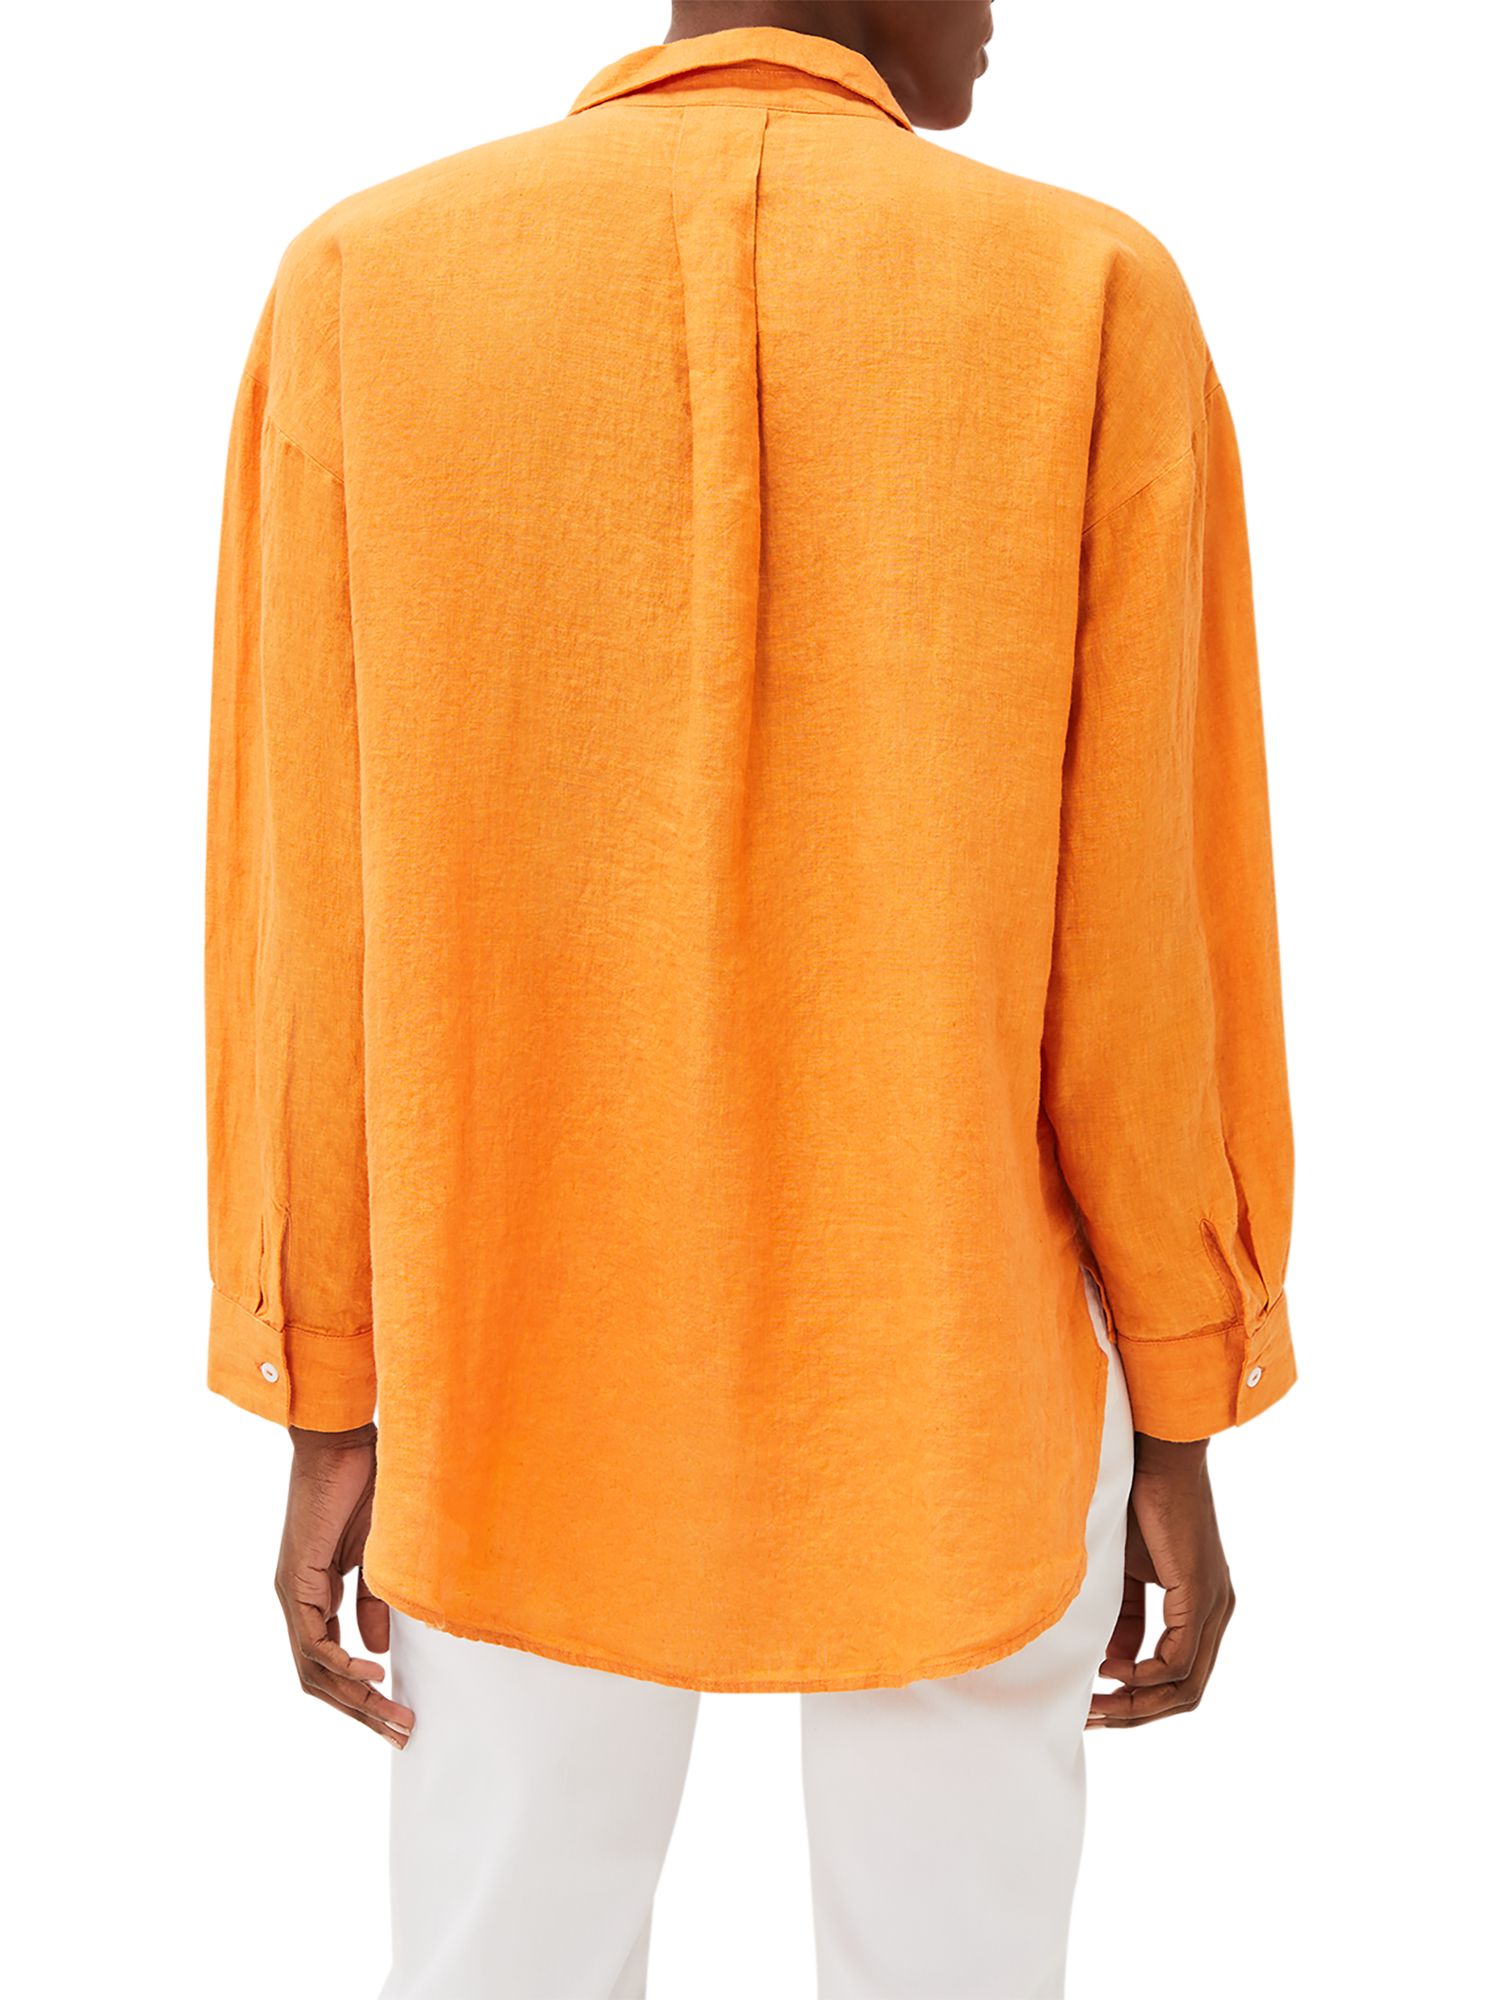 Phase Eight Lou Longline Linen Shirt, Tangerine at John Lewis & Partners